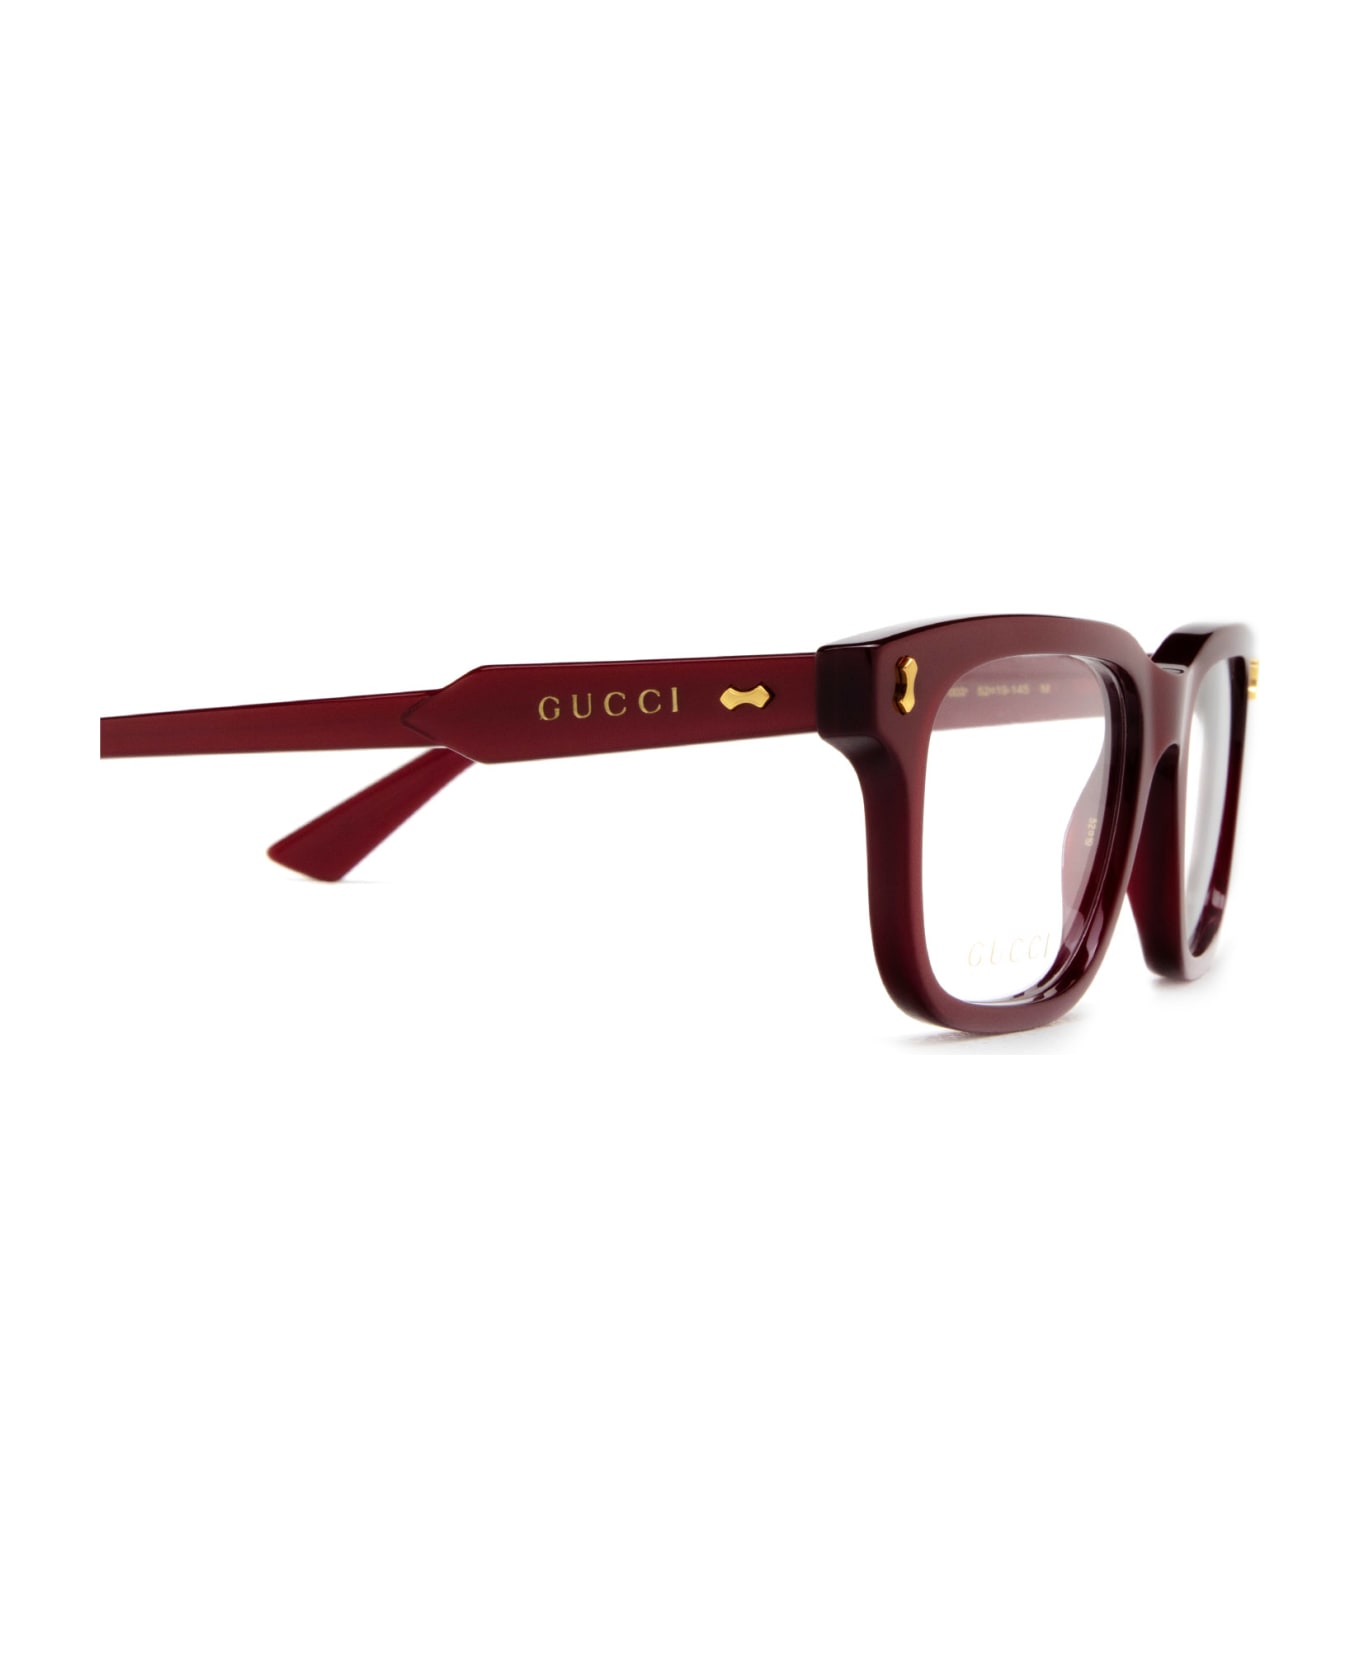 Gucci Eyewear Gg1265o Burgundy Glasses - Burgundy